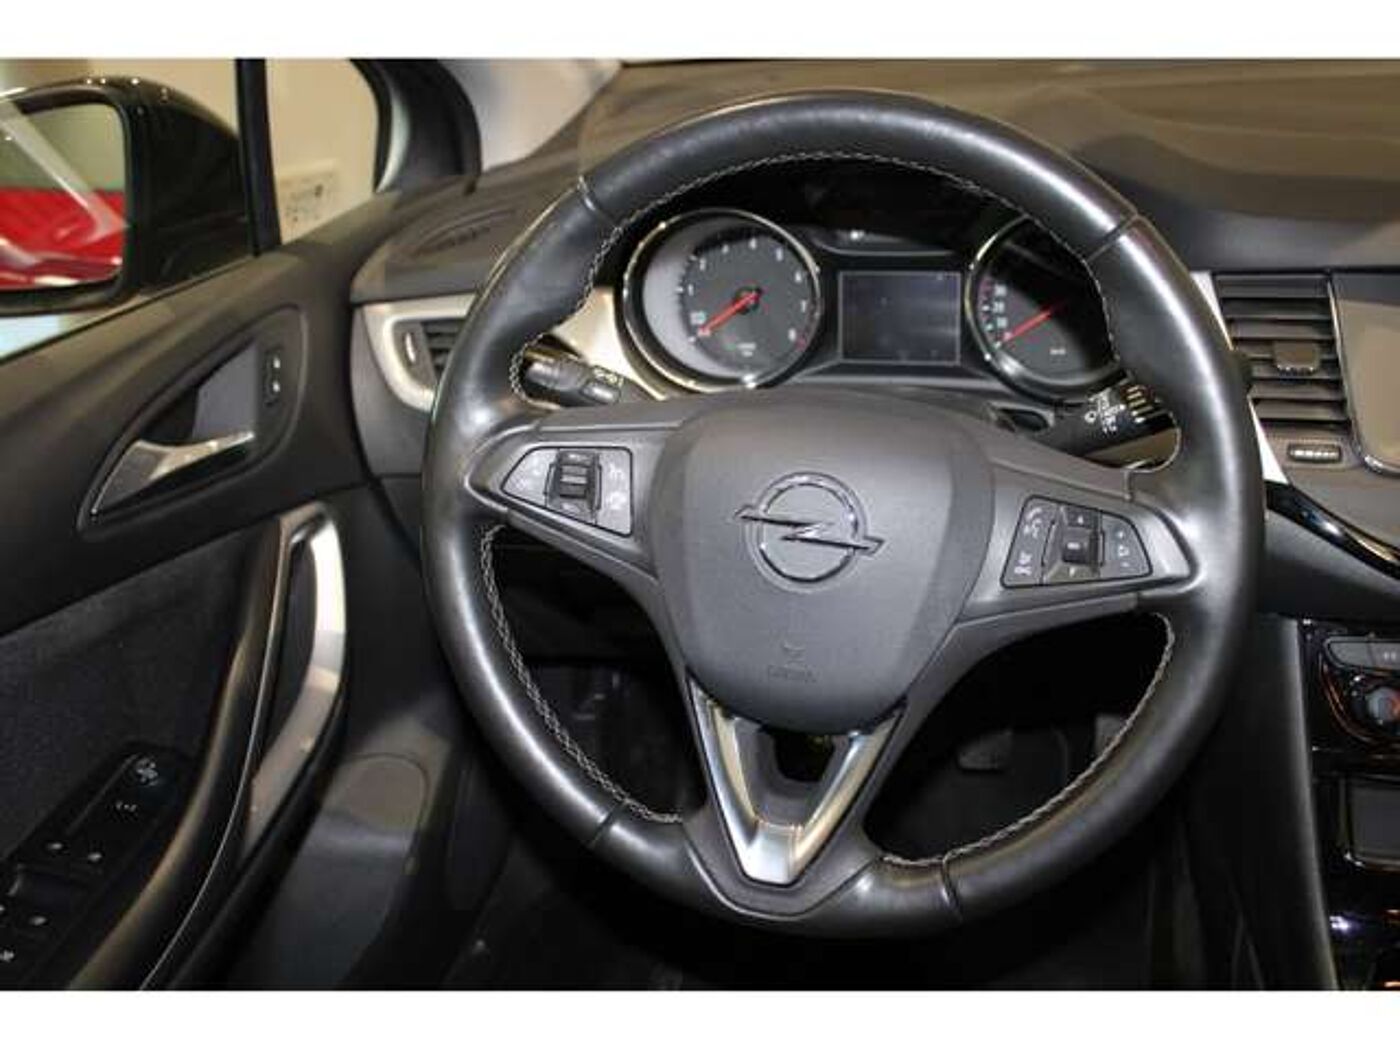 Opel  K Sports Tourer 1.2 Turbo ''2020'' Parksensoren Si